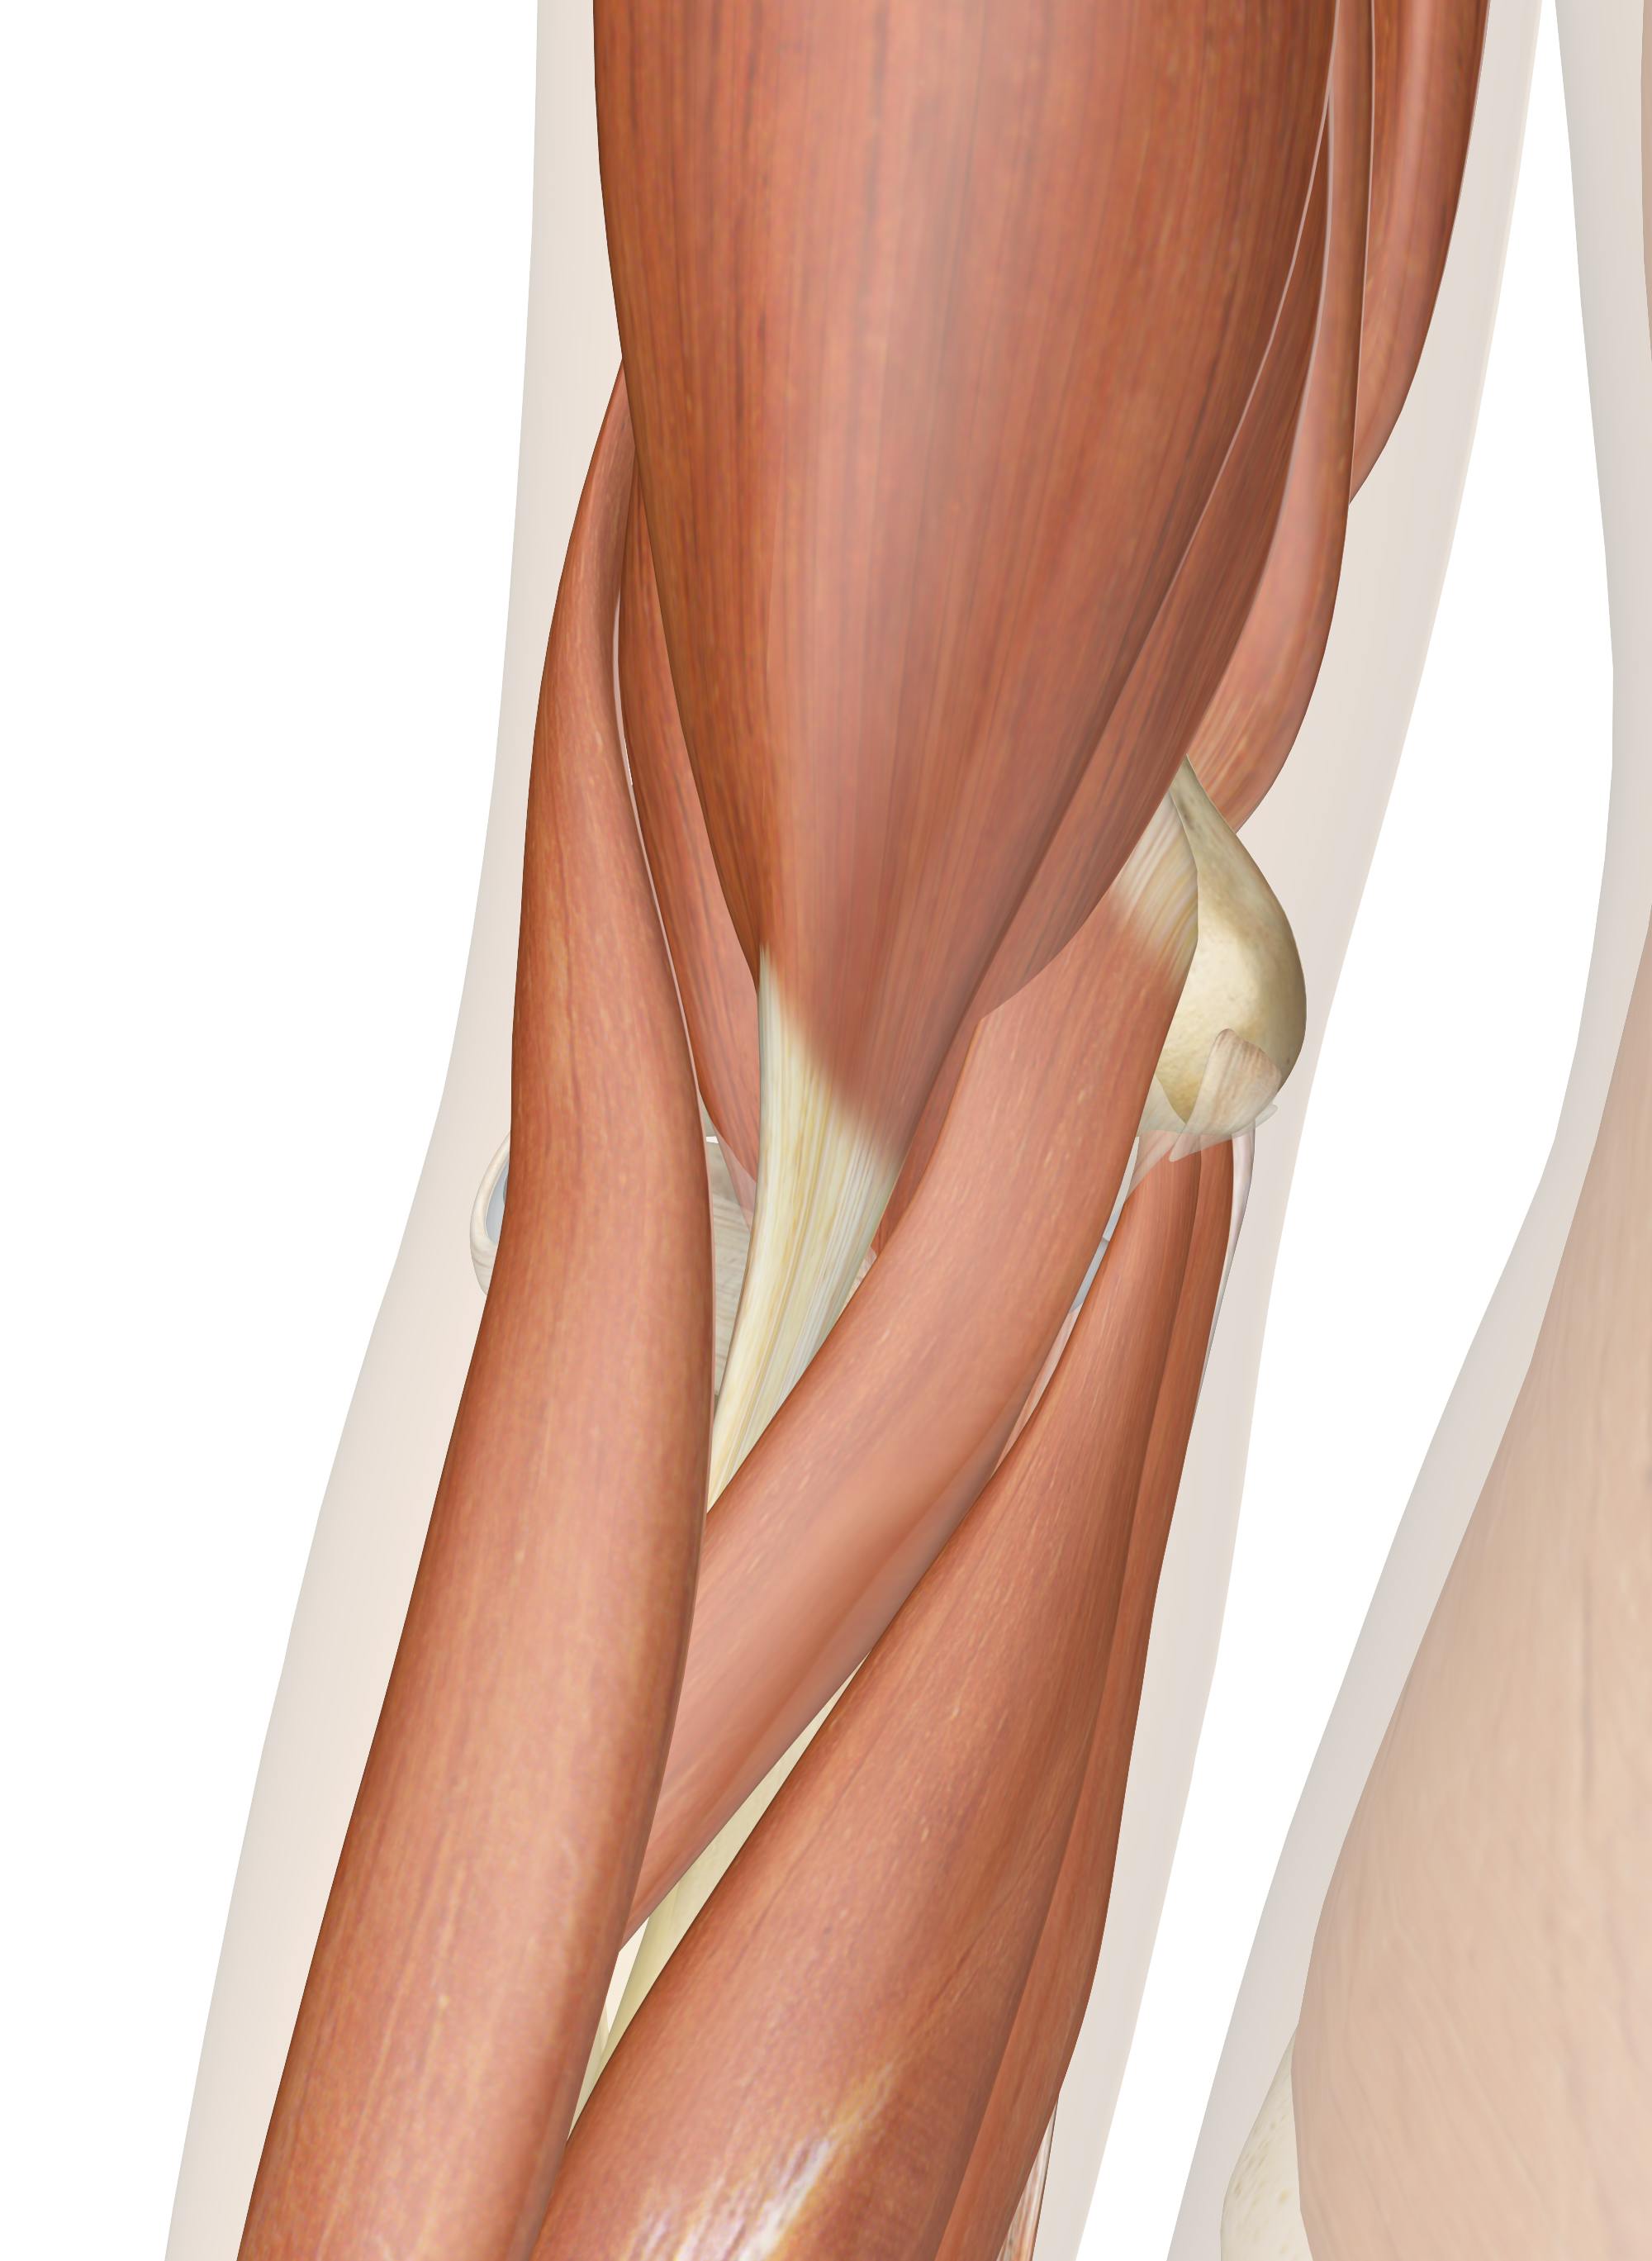 upper arm muscles diagram